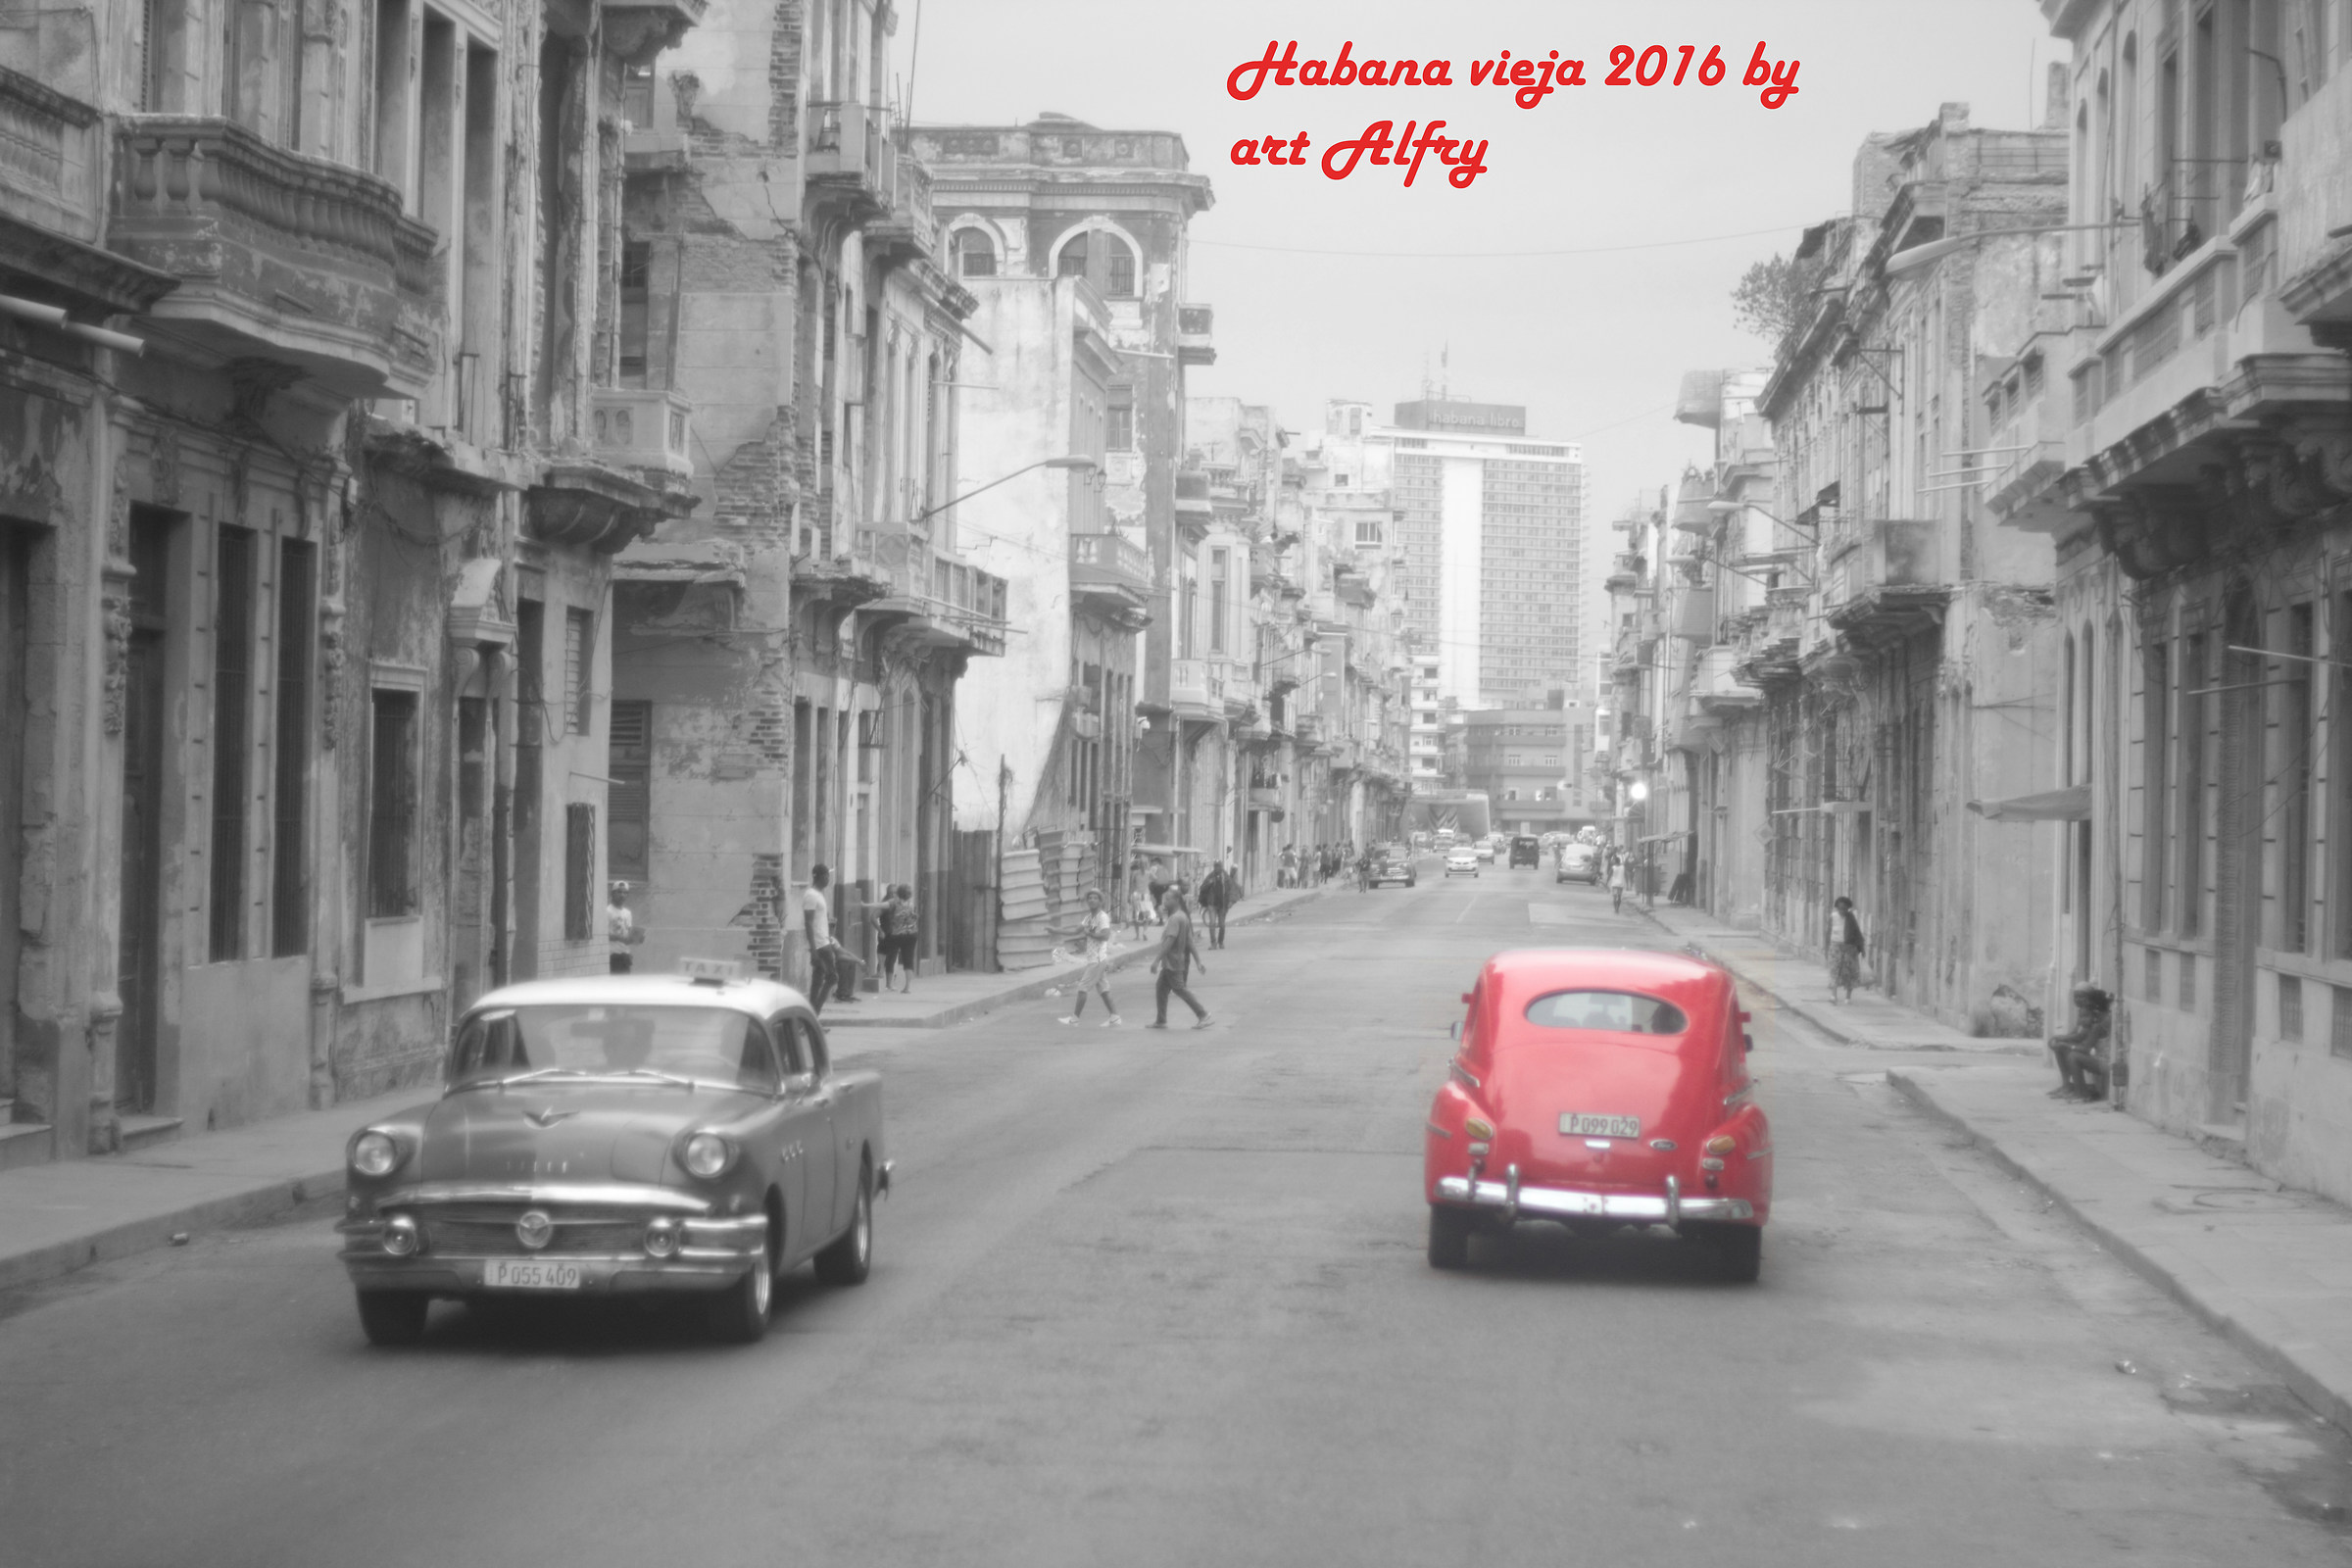 Almendrone rojo en la Habana vieja 2016...